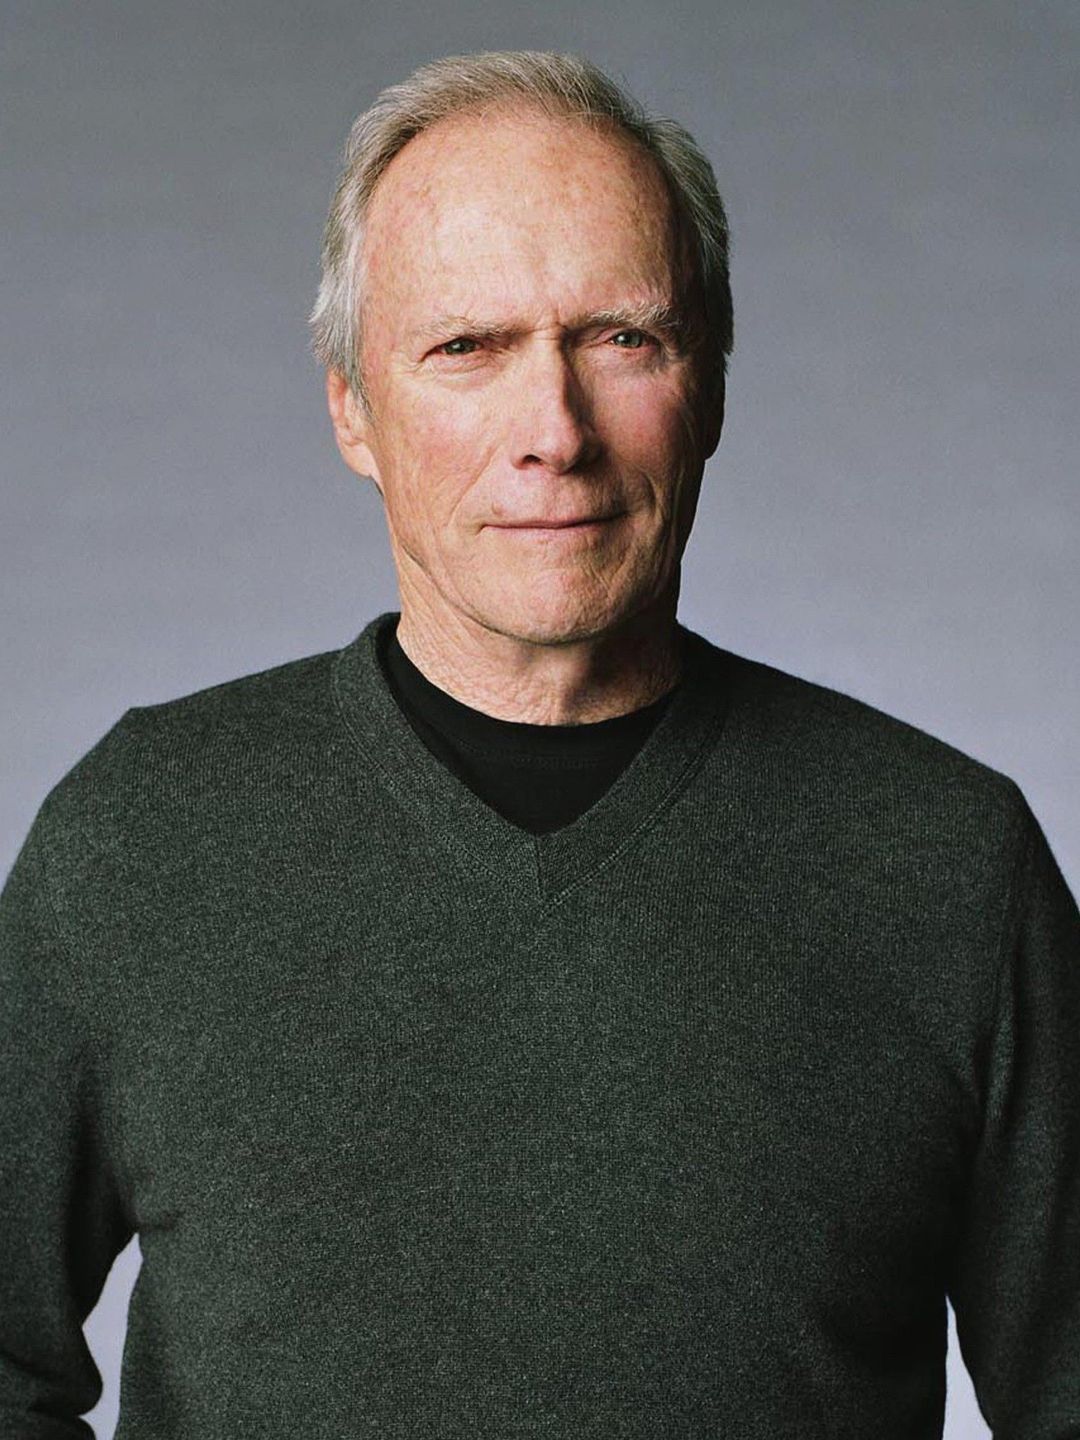 Clint Eastwood life story